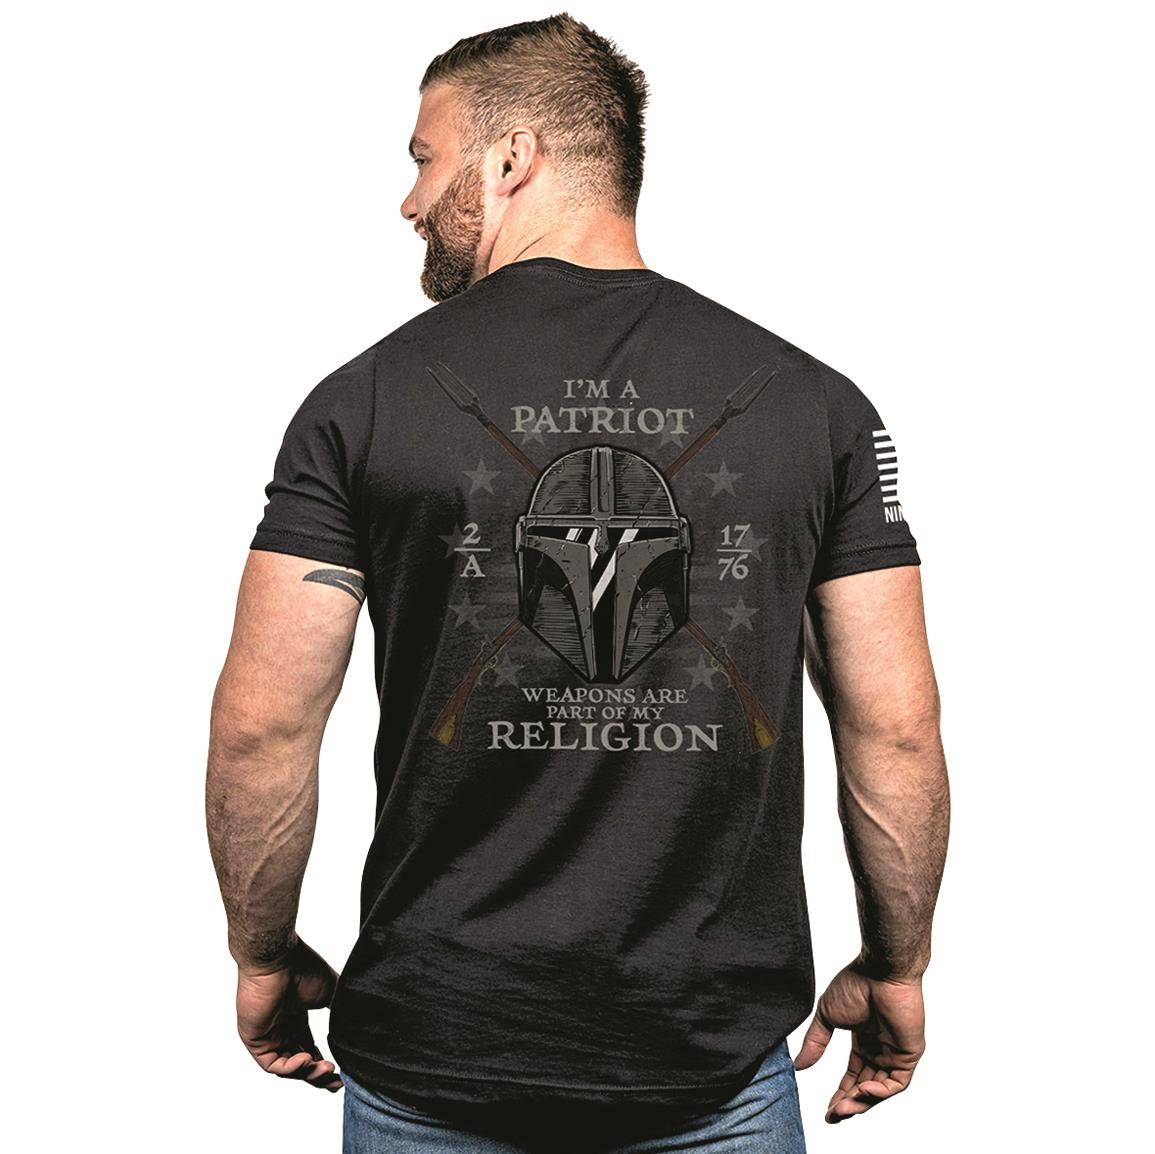 Nine Line 2A is My Religion T-shirt, Black